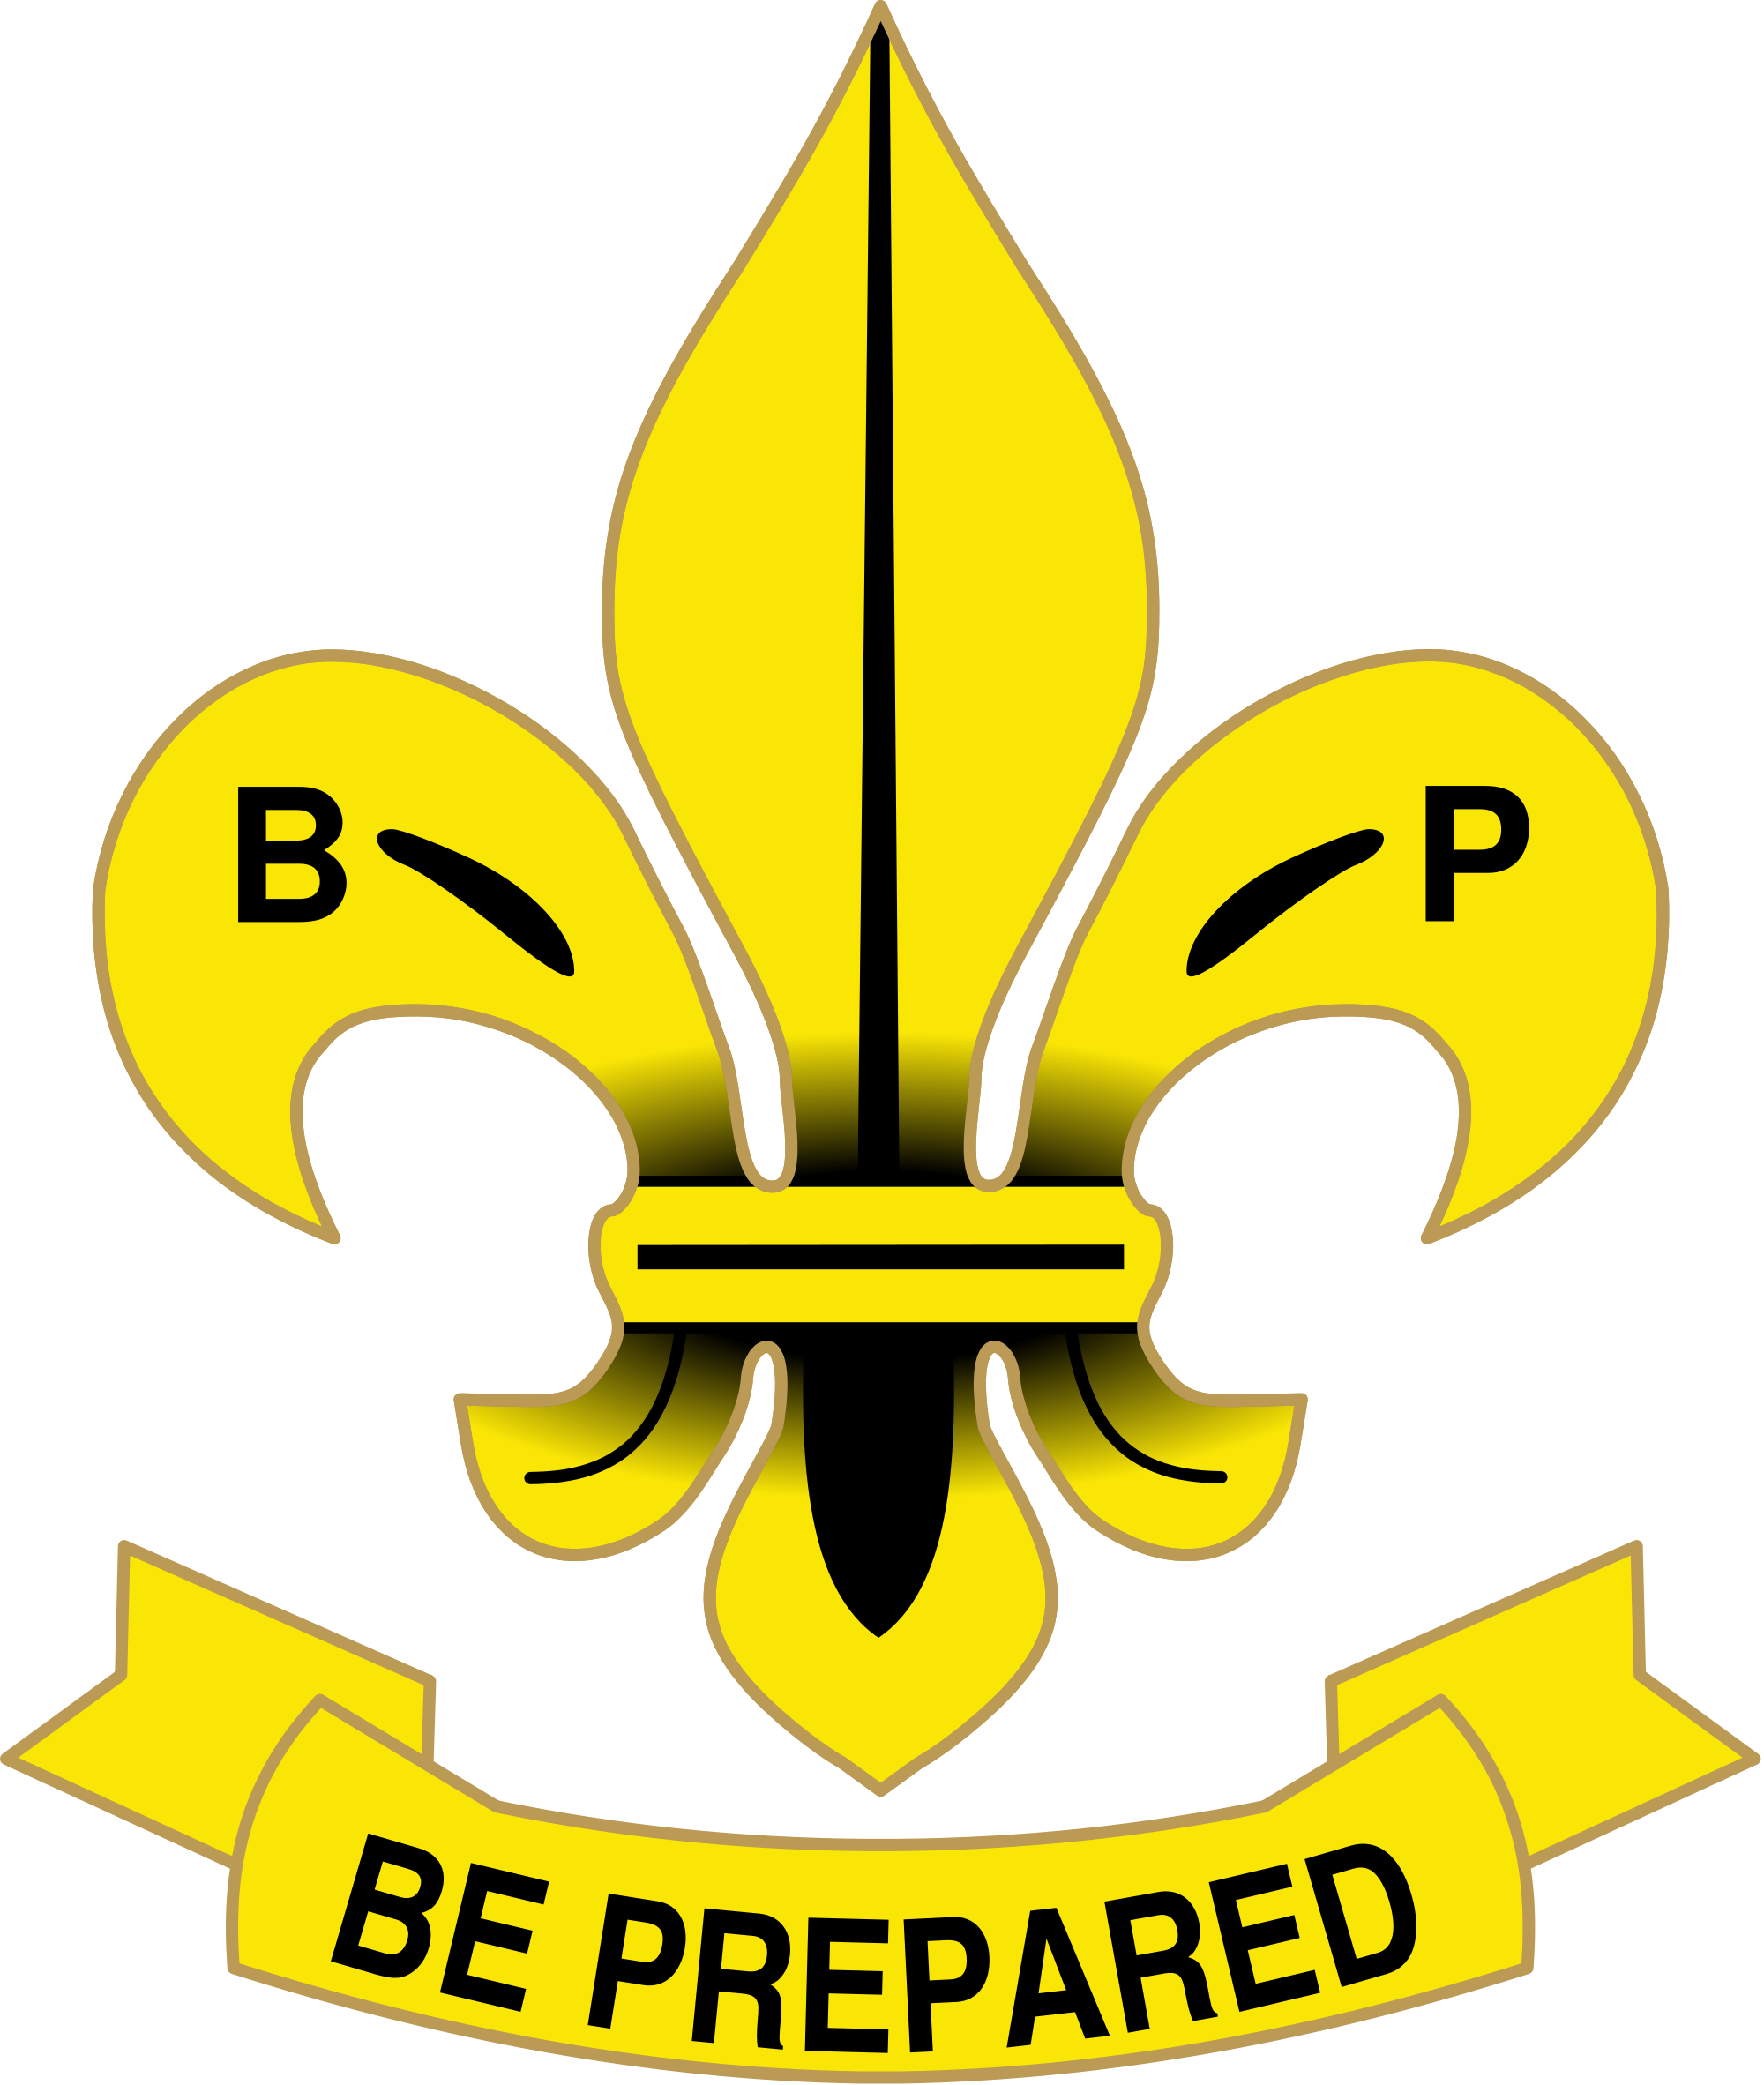 Baden-powell Scouts' Association - Baden Powell Scout Association (2000x2364)